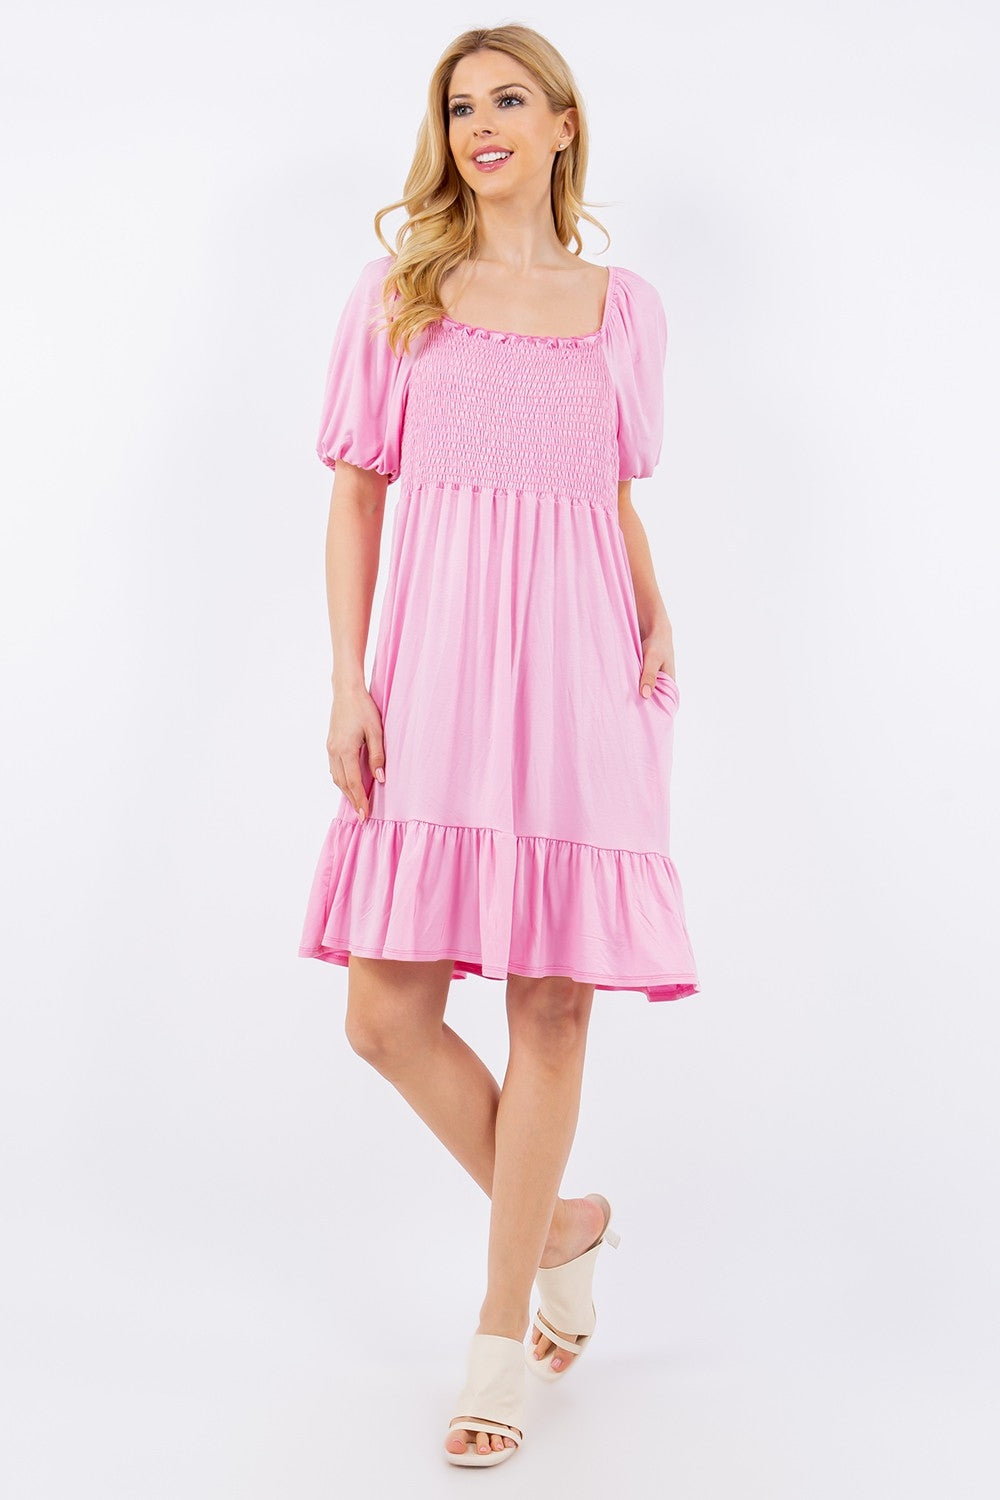 Simple Sweet Smocked Dress *3 colors*